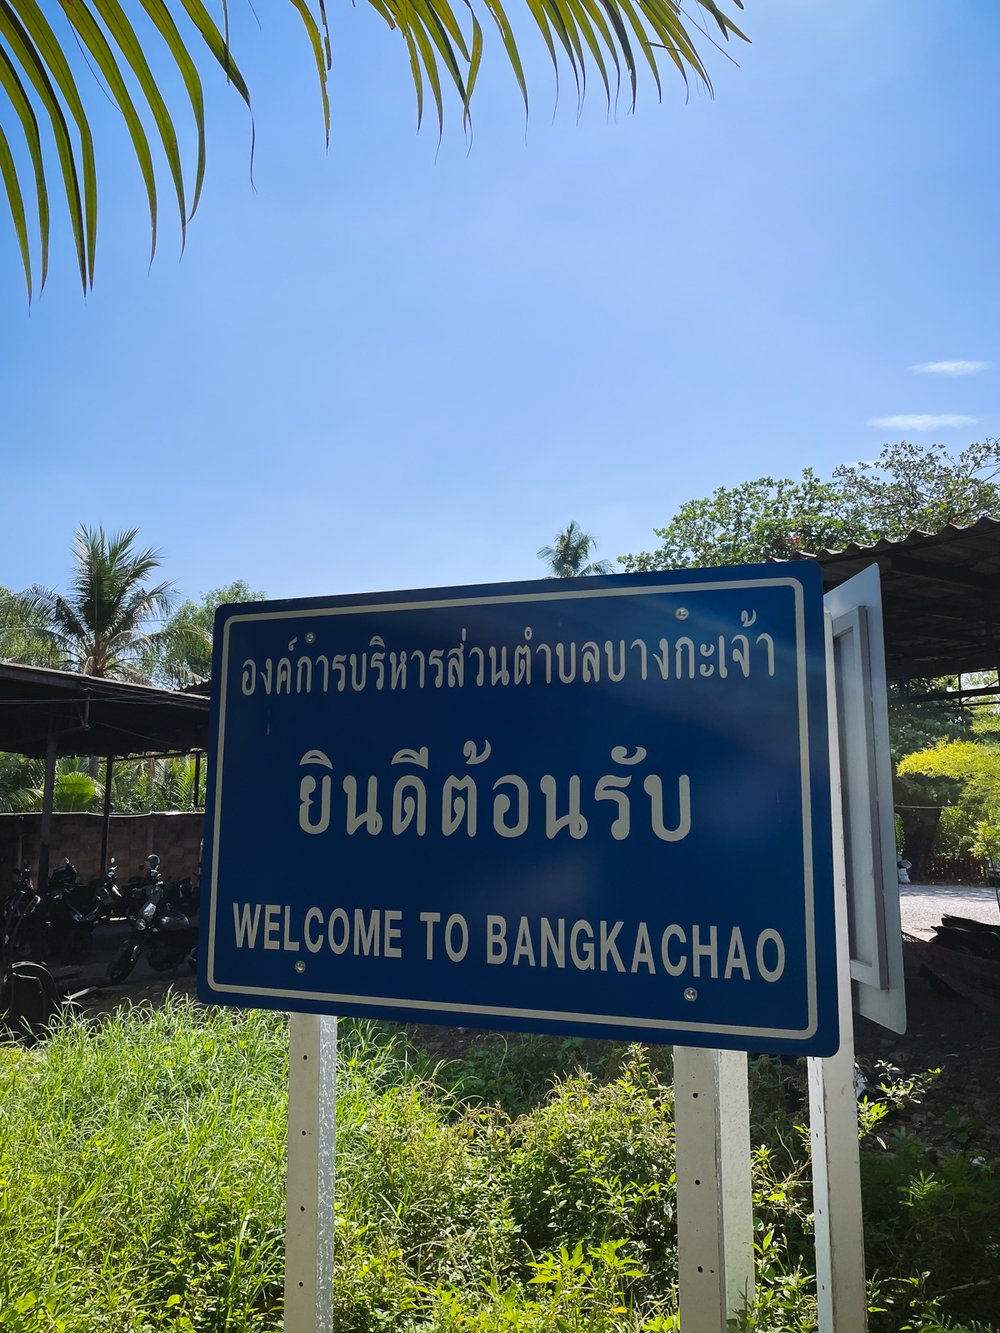 asien_thailand_bangkok_reise_blog_leichtesgepaeck_ausflug_erfahrung_tipps_tricks-030.jpg